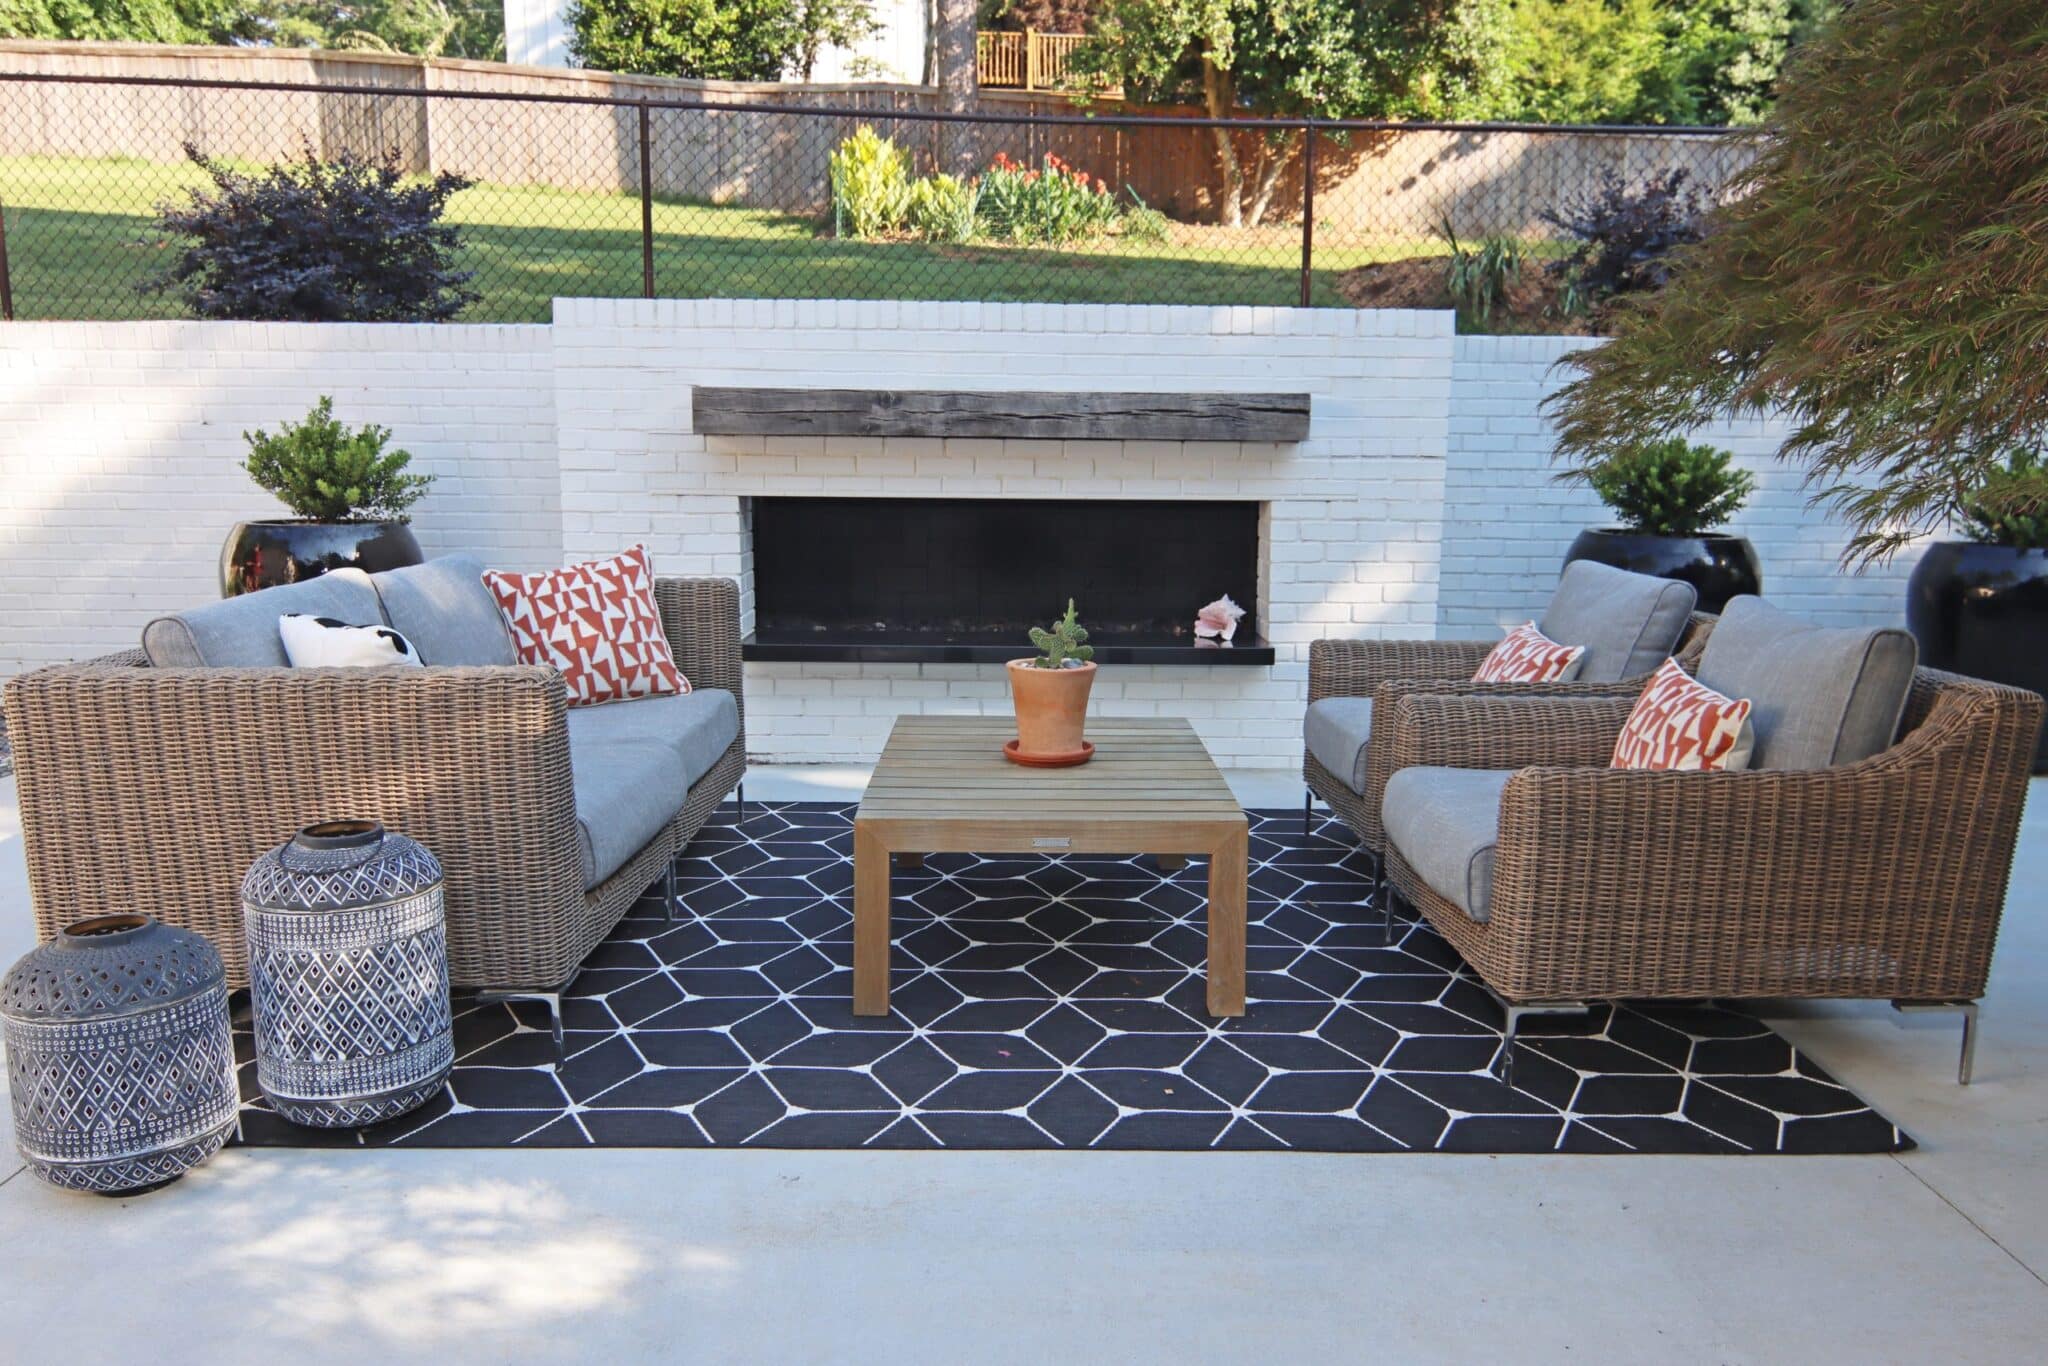 Midcentury modern custom white brick fireplace and seating area